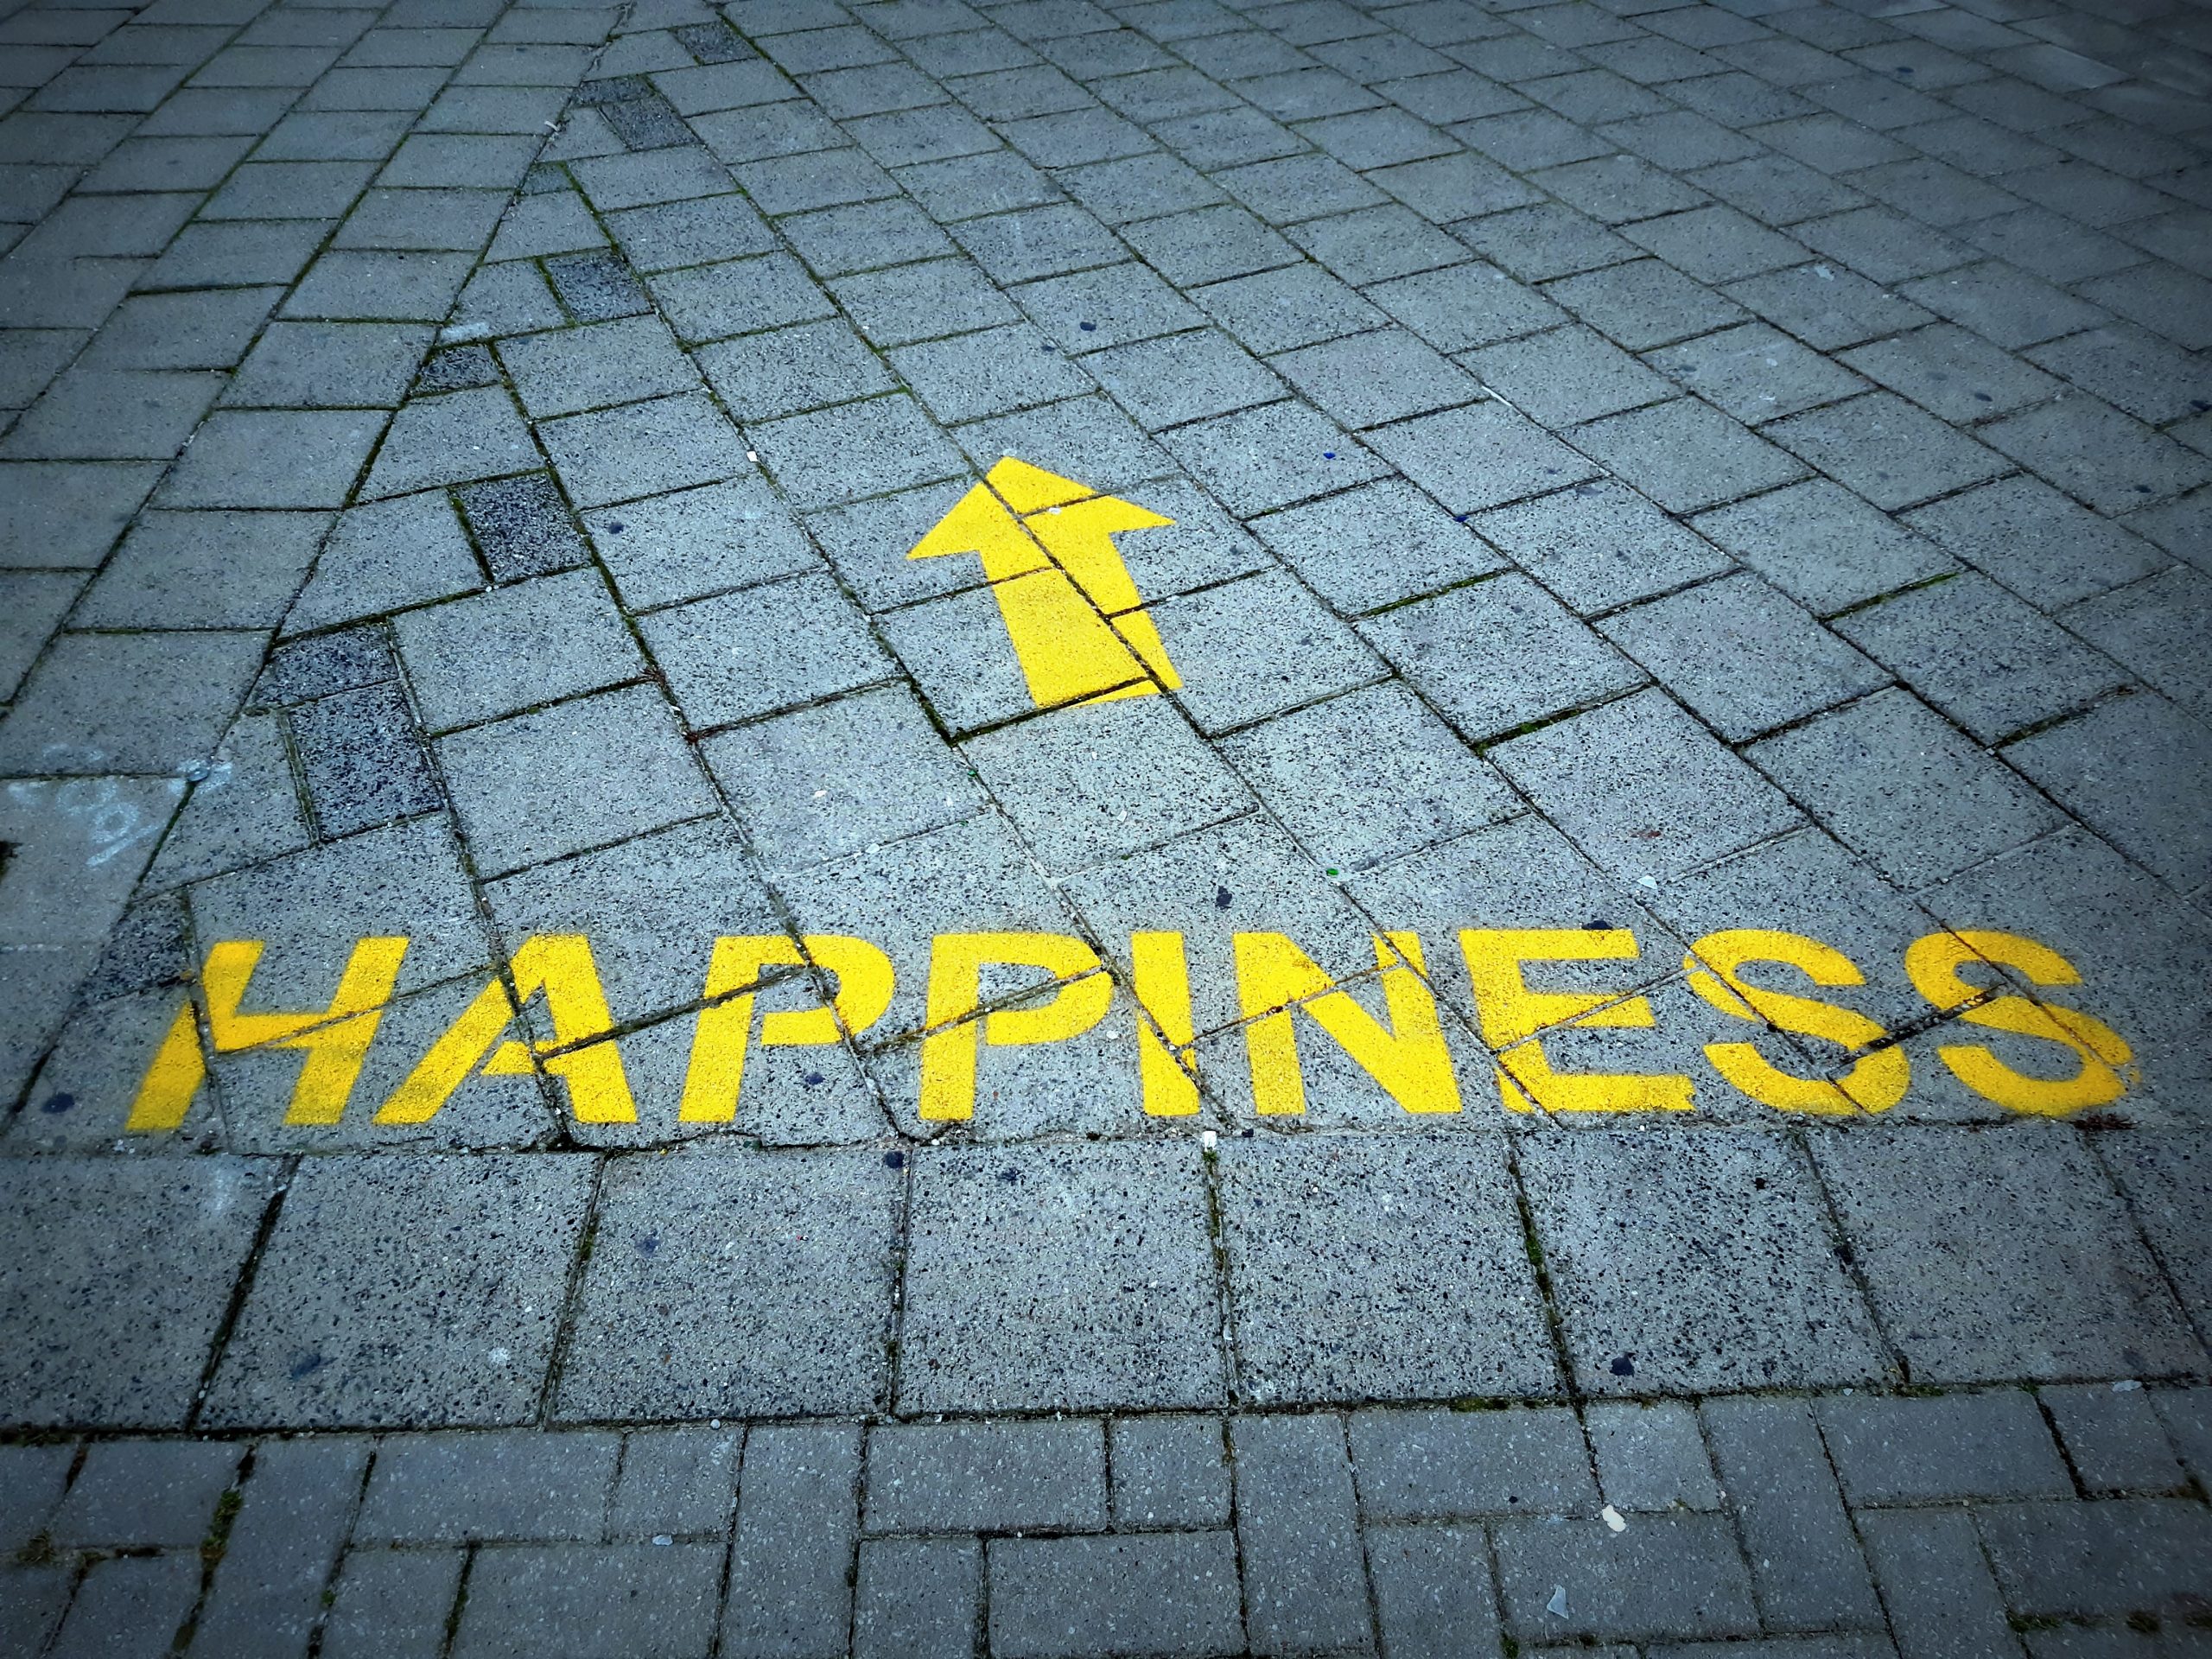 Kebahagiaan: Tujuan Hidup atau Proses dalam Hidup?